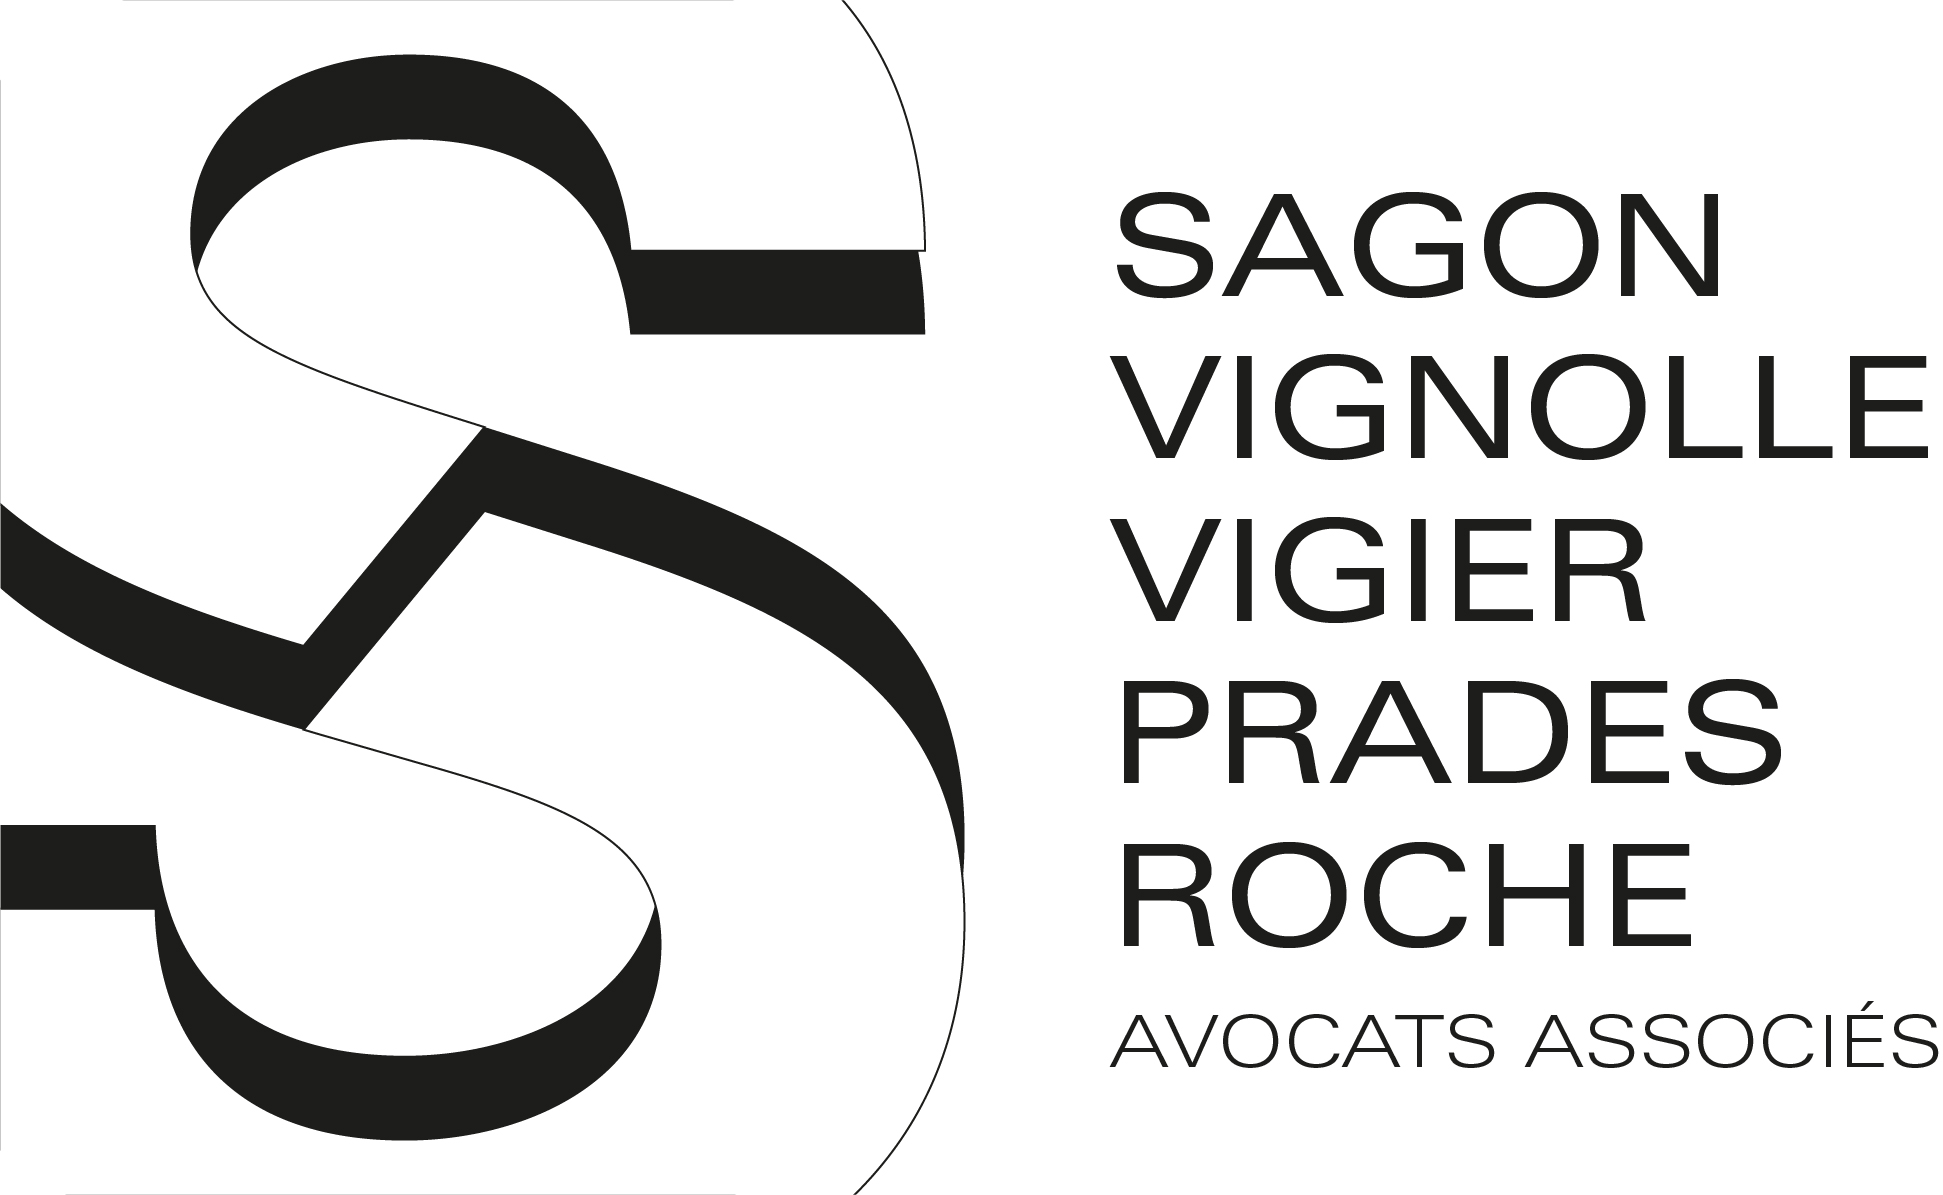 Sagon Vignolle Vigier Prades Roche Avocats Associés Logo